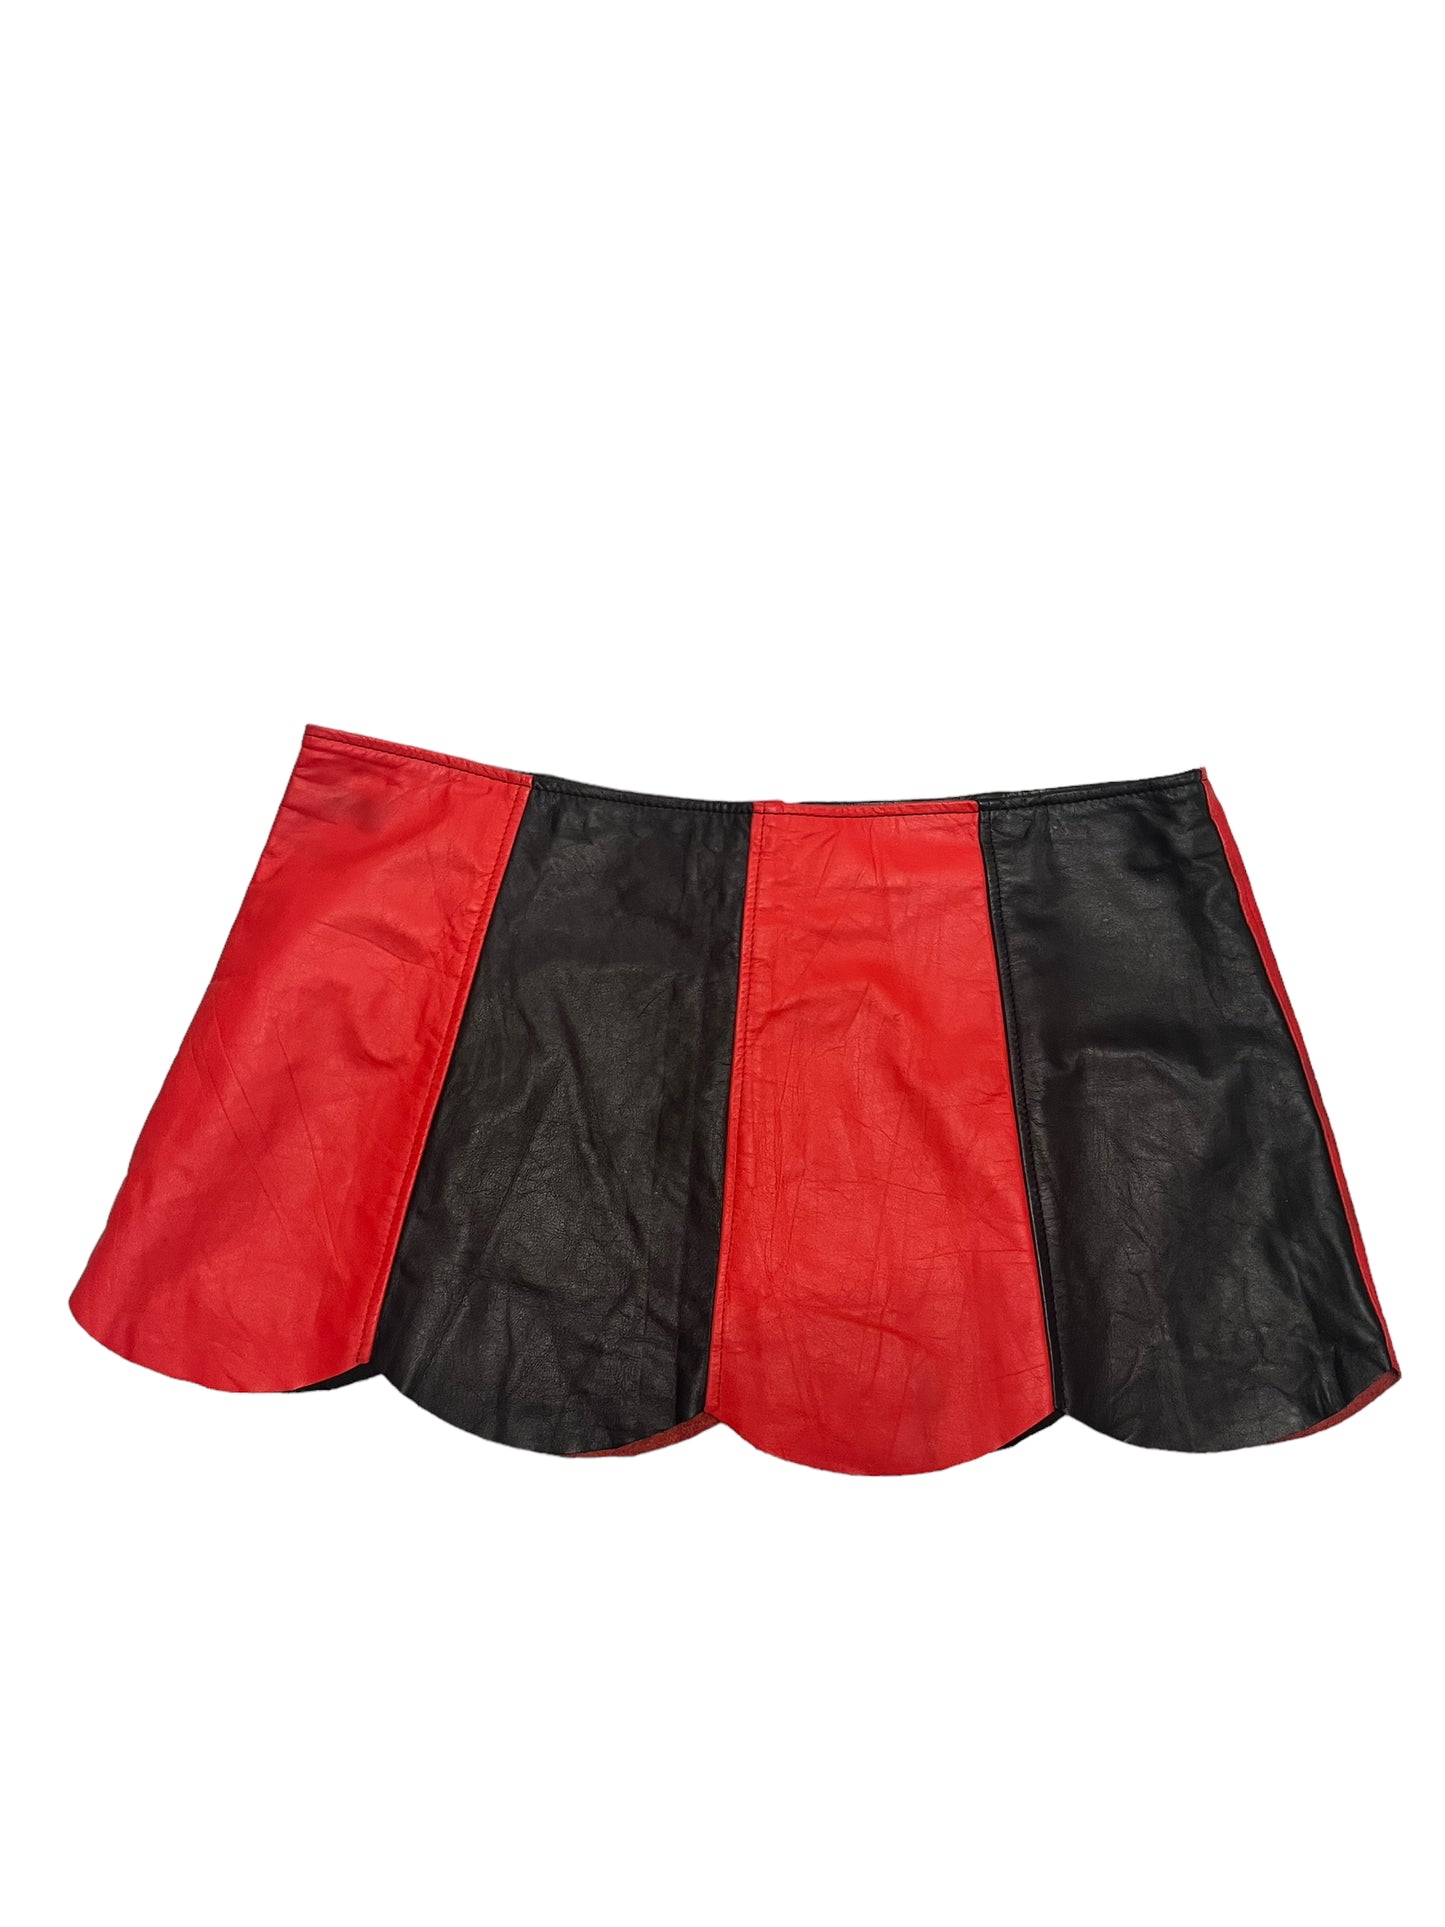 Fashion World - LL49 - Daring Red with Black Skirt